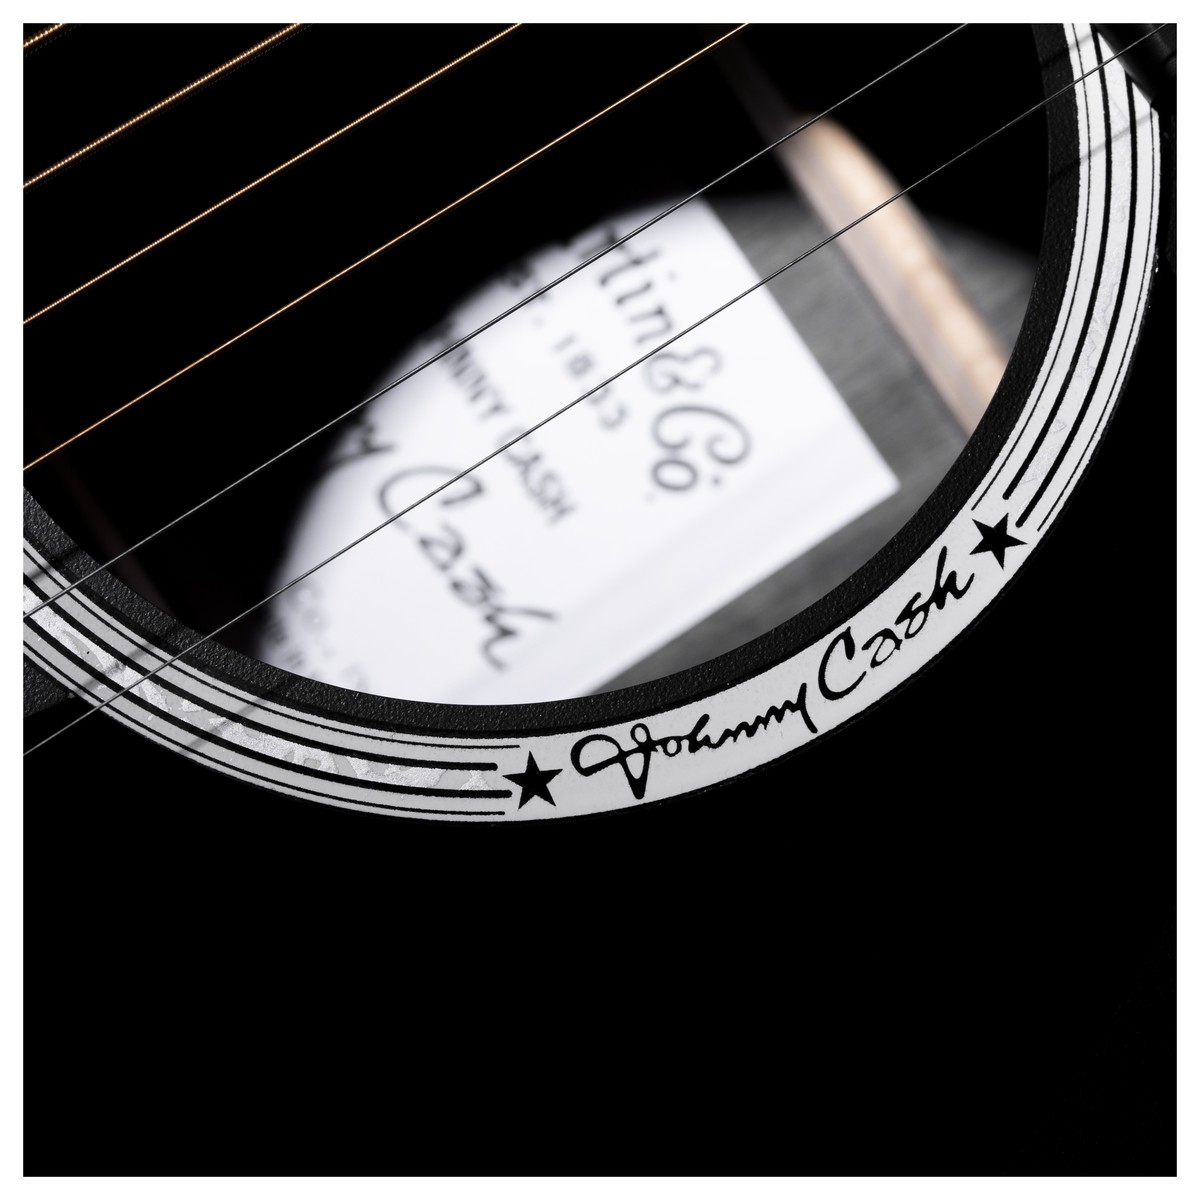 Martin Johnny Cash Dx Signature Dreadnought Hpl Ric - Black - Electro acoustic guitar - Variation 3